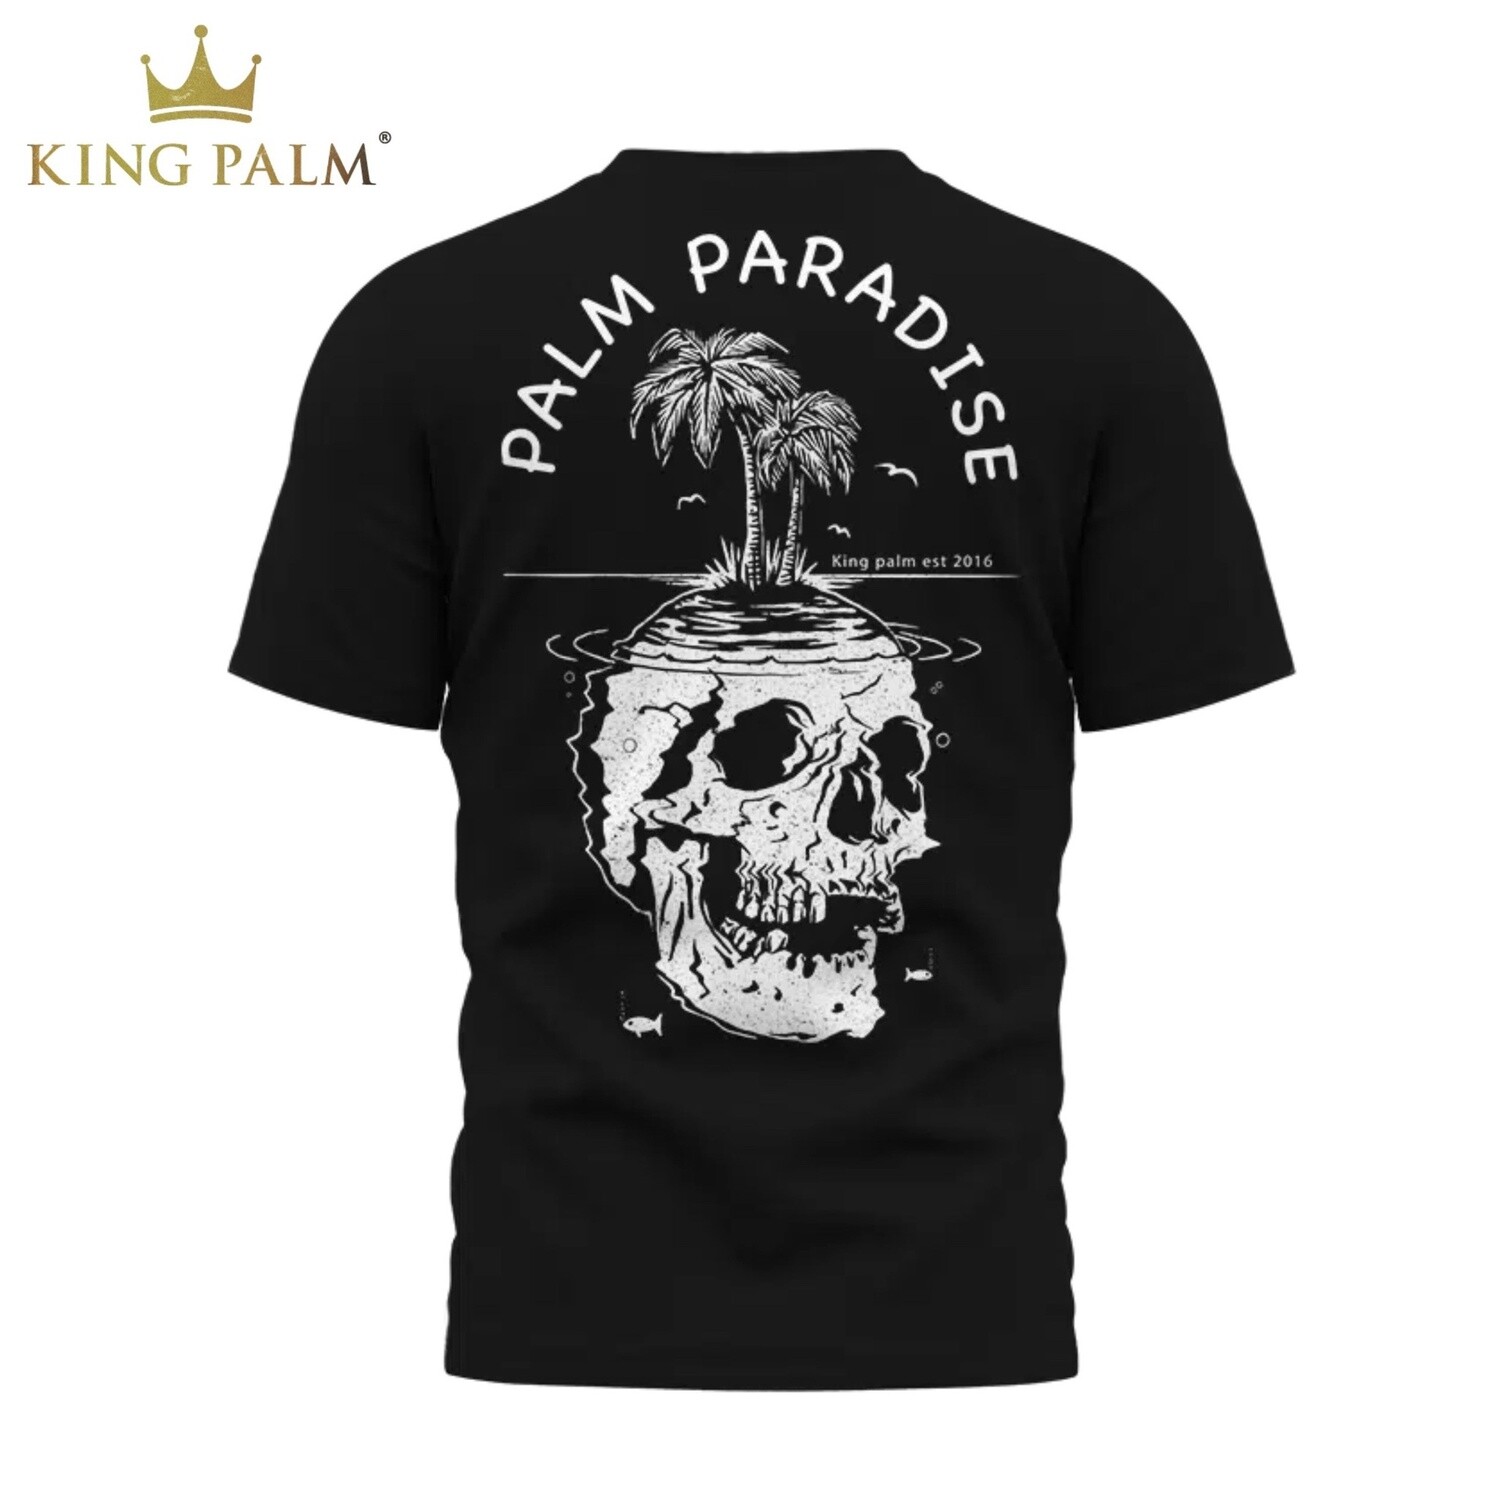 King Palm® T-Shirt (Paradise)